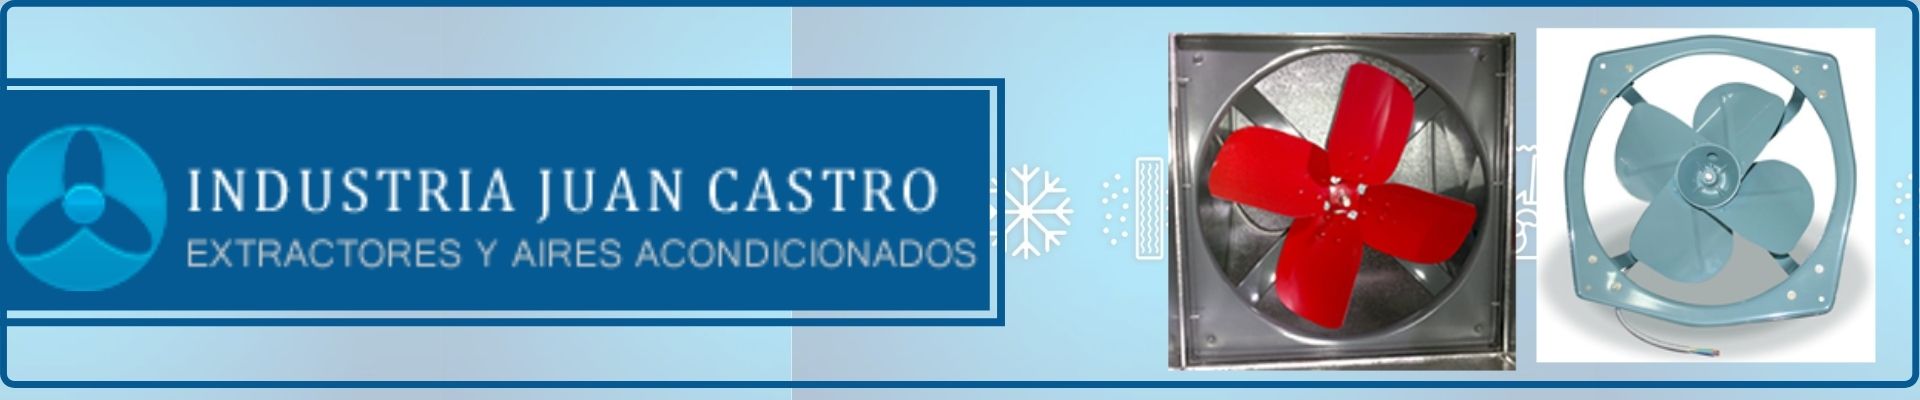 Industria Juan Castro Agroshow banner